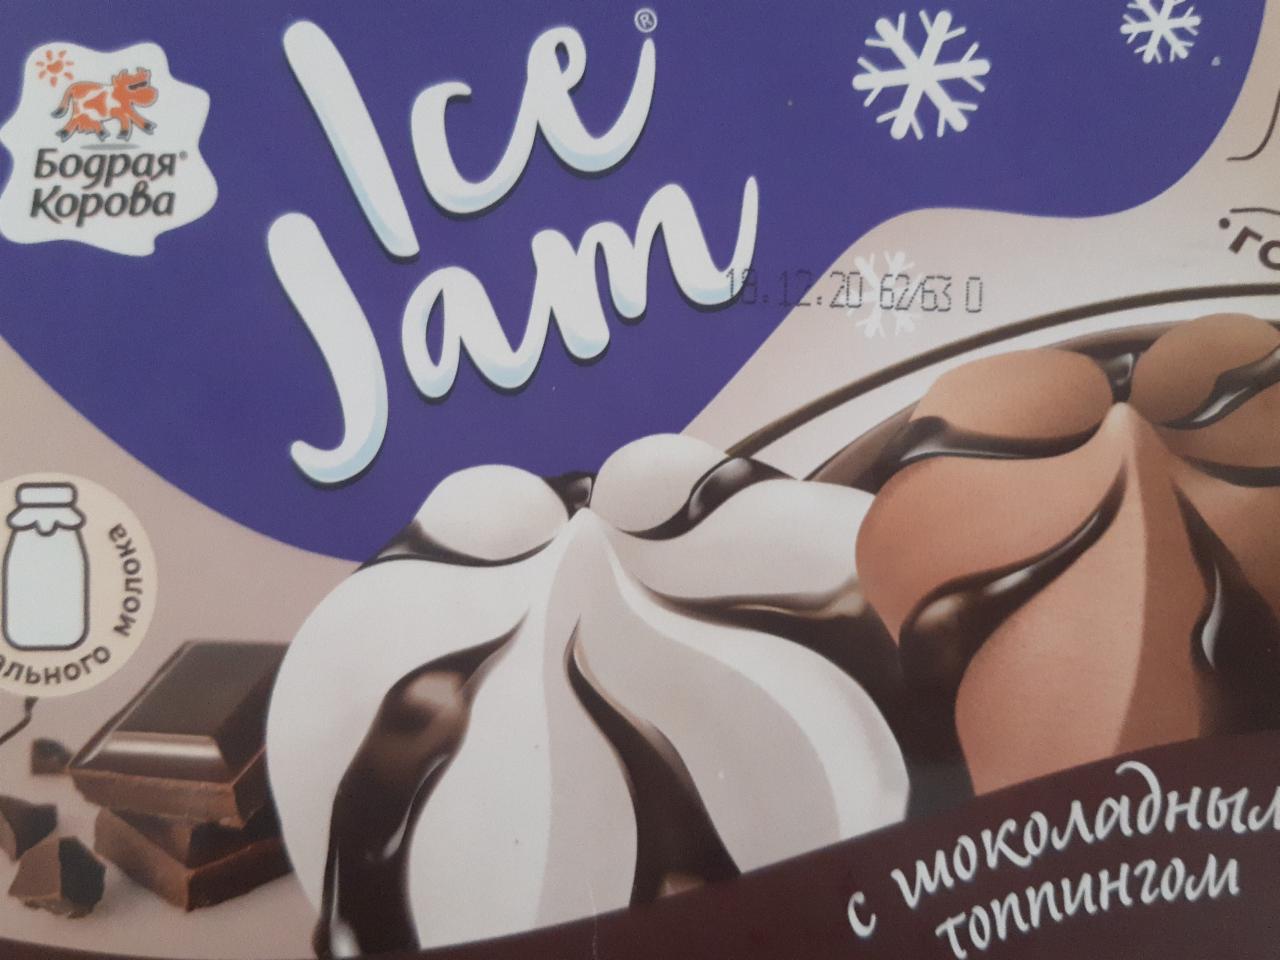 Фото - мороженон Ice Jam с шоколадным топпингом Бодрая корова